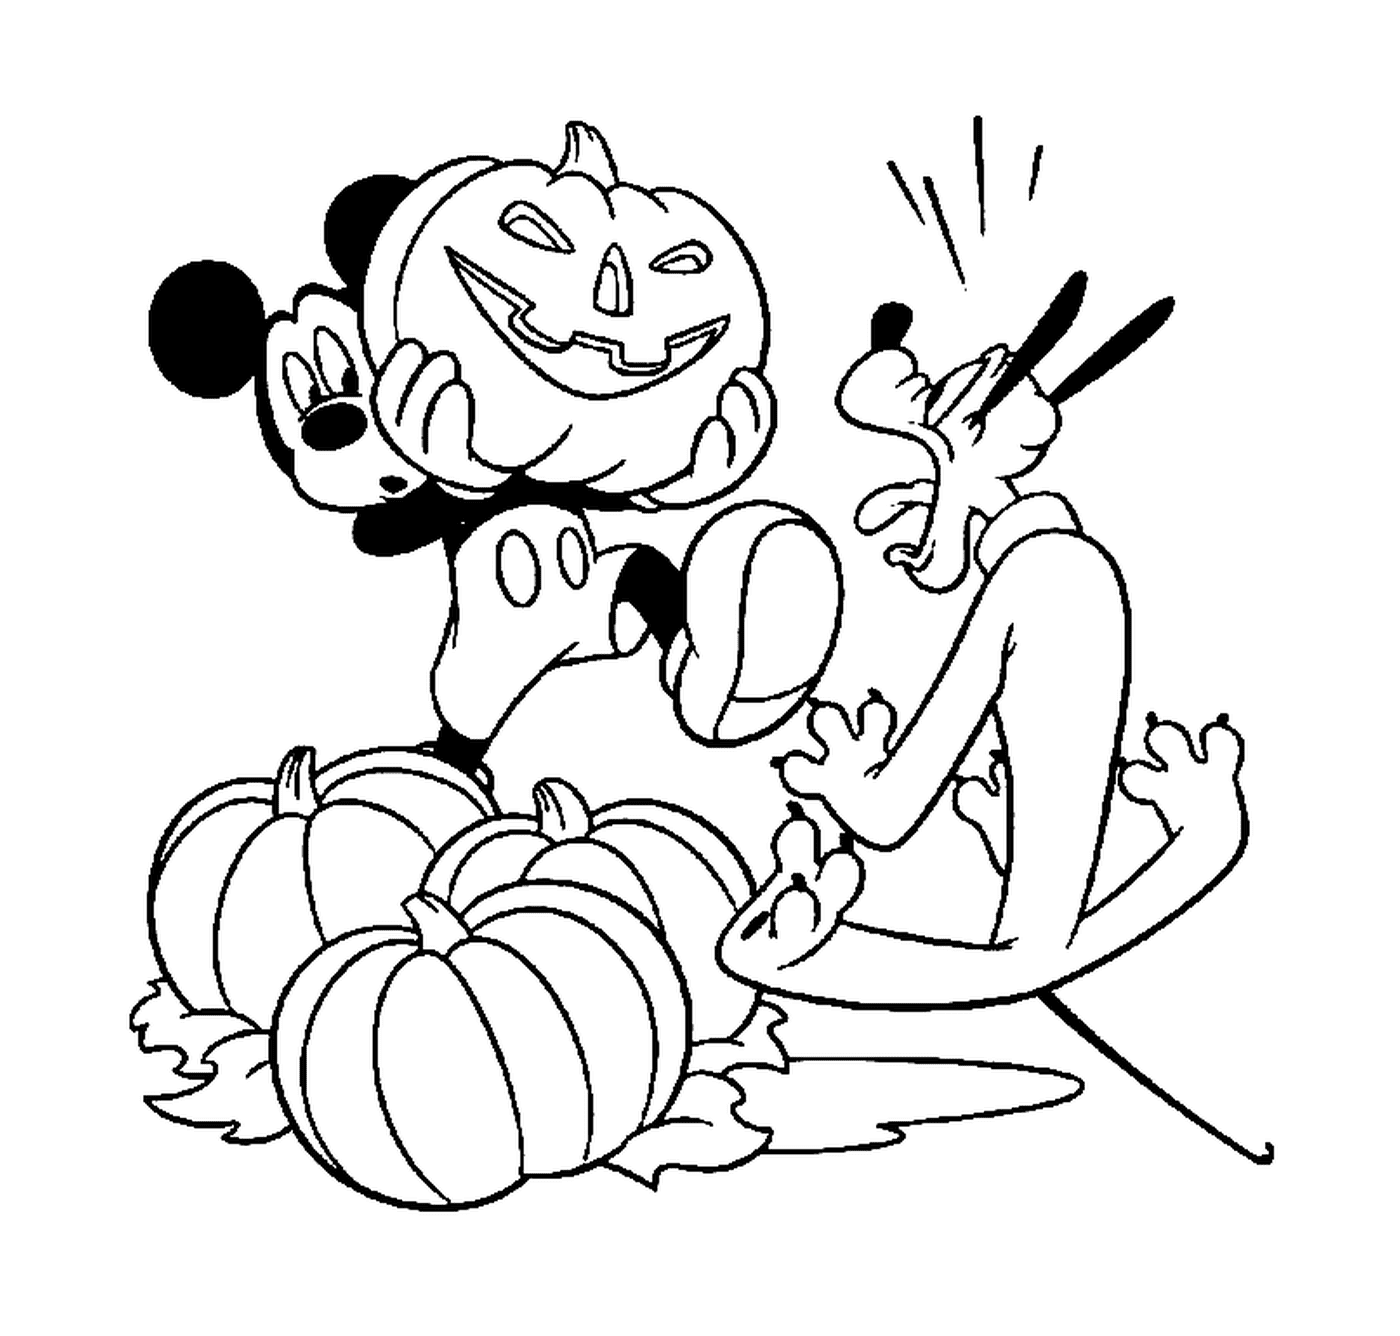 Pluto a peur de la citrouille de Mickey